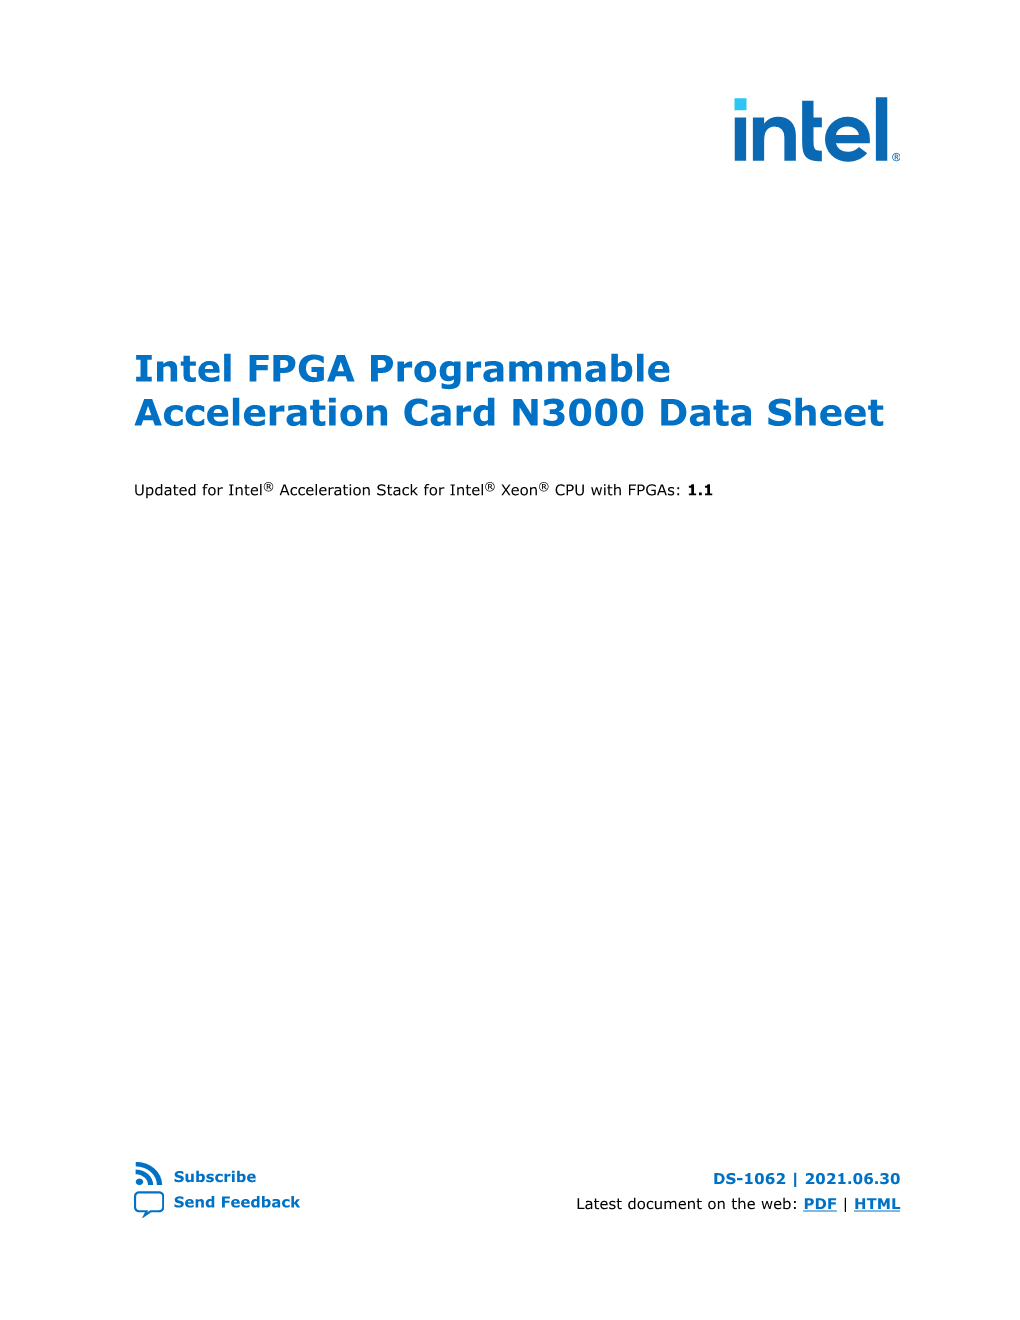 Intel FPGA Programmable Acceleration Card N3000 Data Sheet